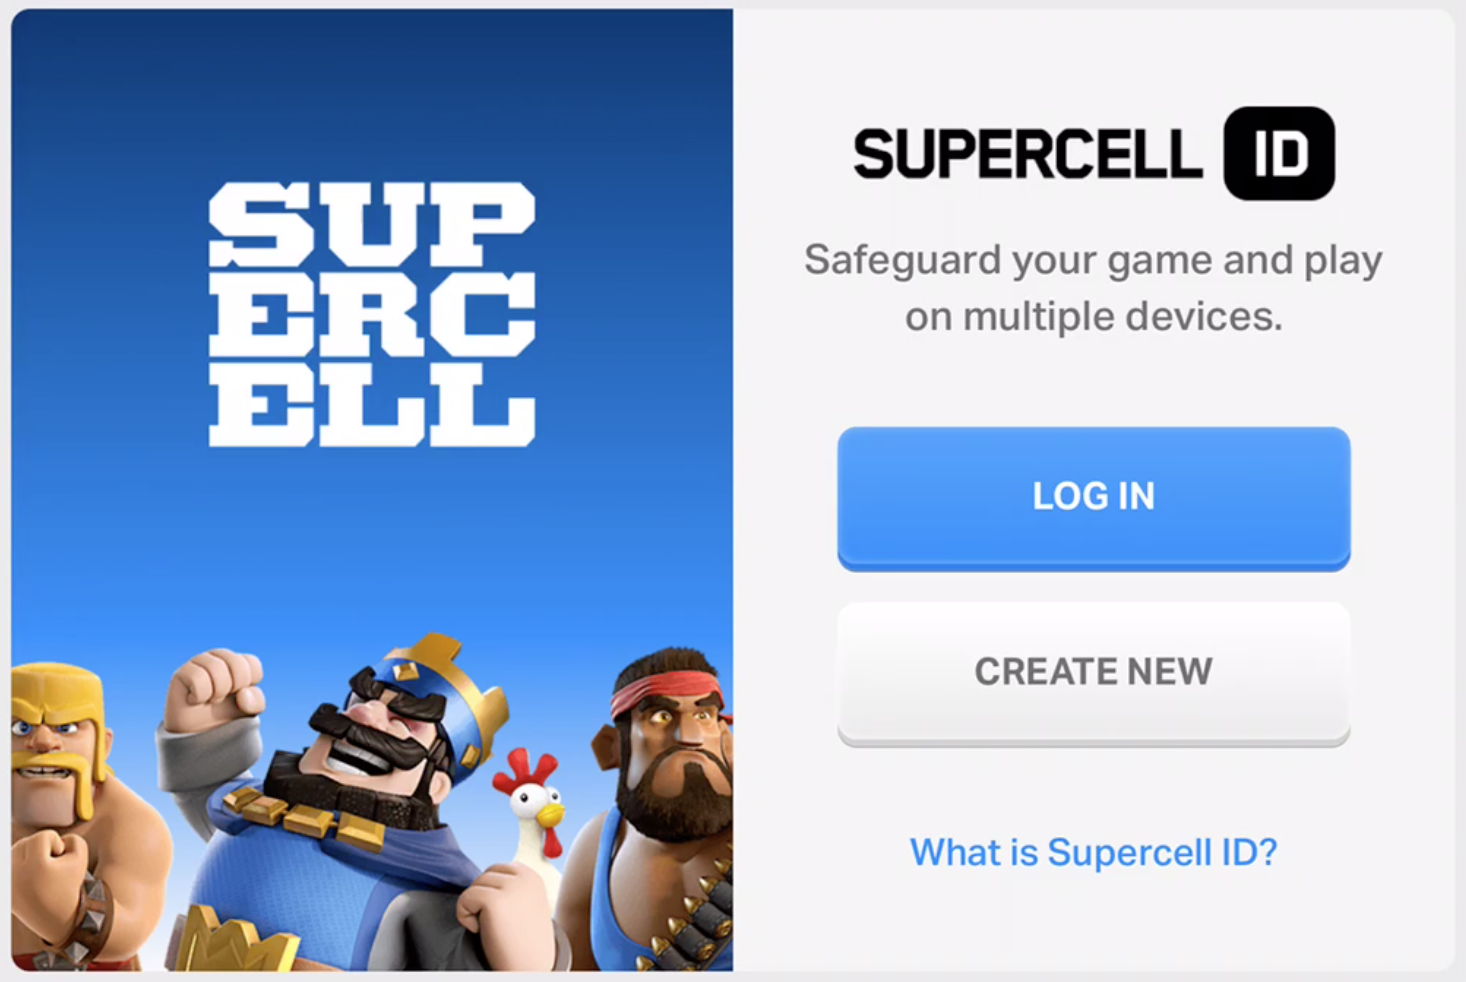 Код подтверждения суперселл. Суперселл ID. Картинки Supercell. Игры Supercell ID. Значок Supercell ID.